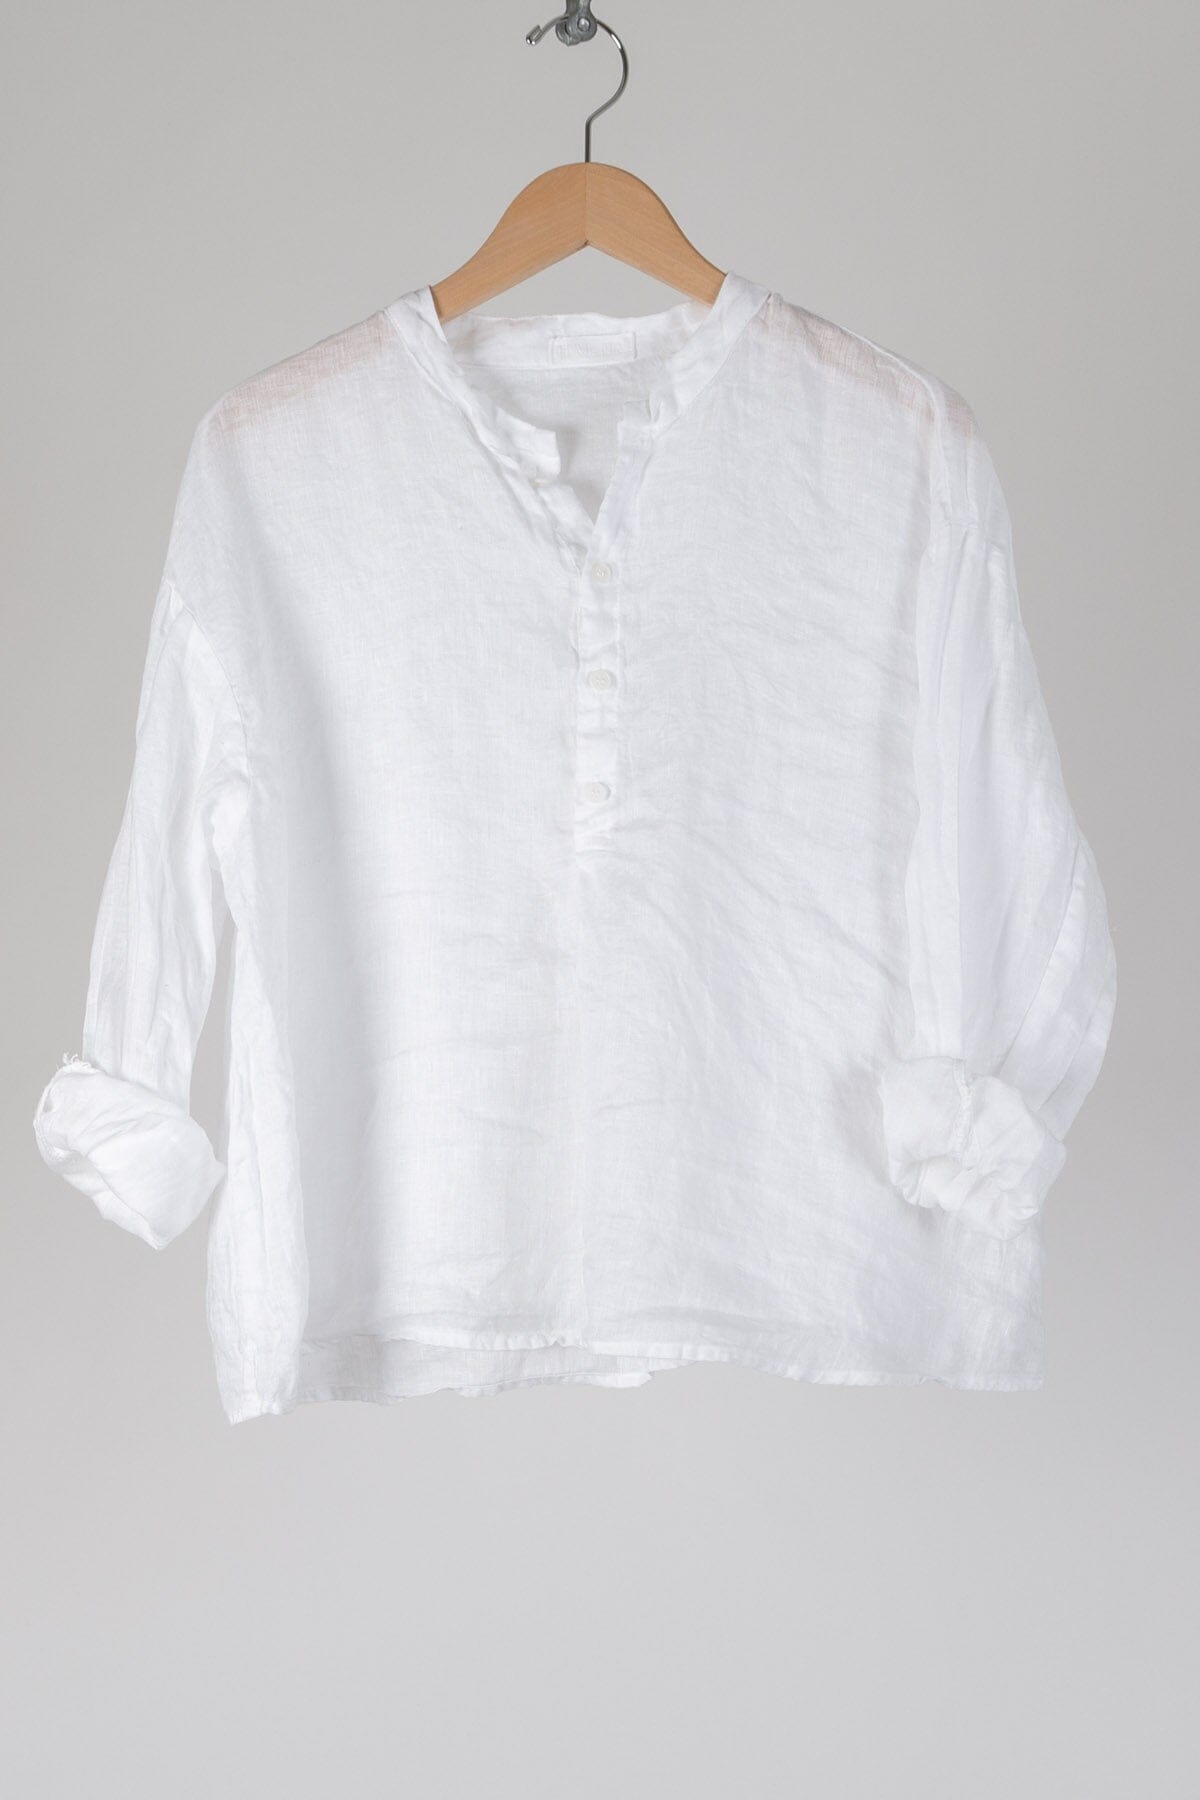 Ariana - Linen S10 - Linen Shirt/Top/Tunic CP Shades white